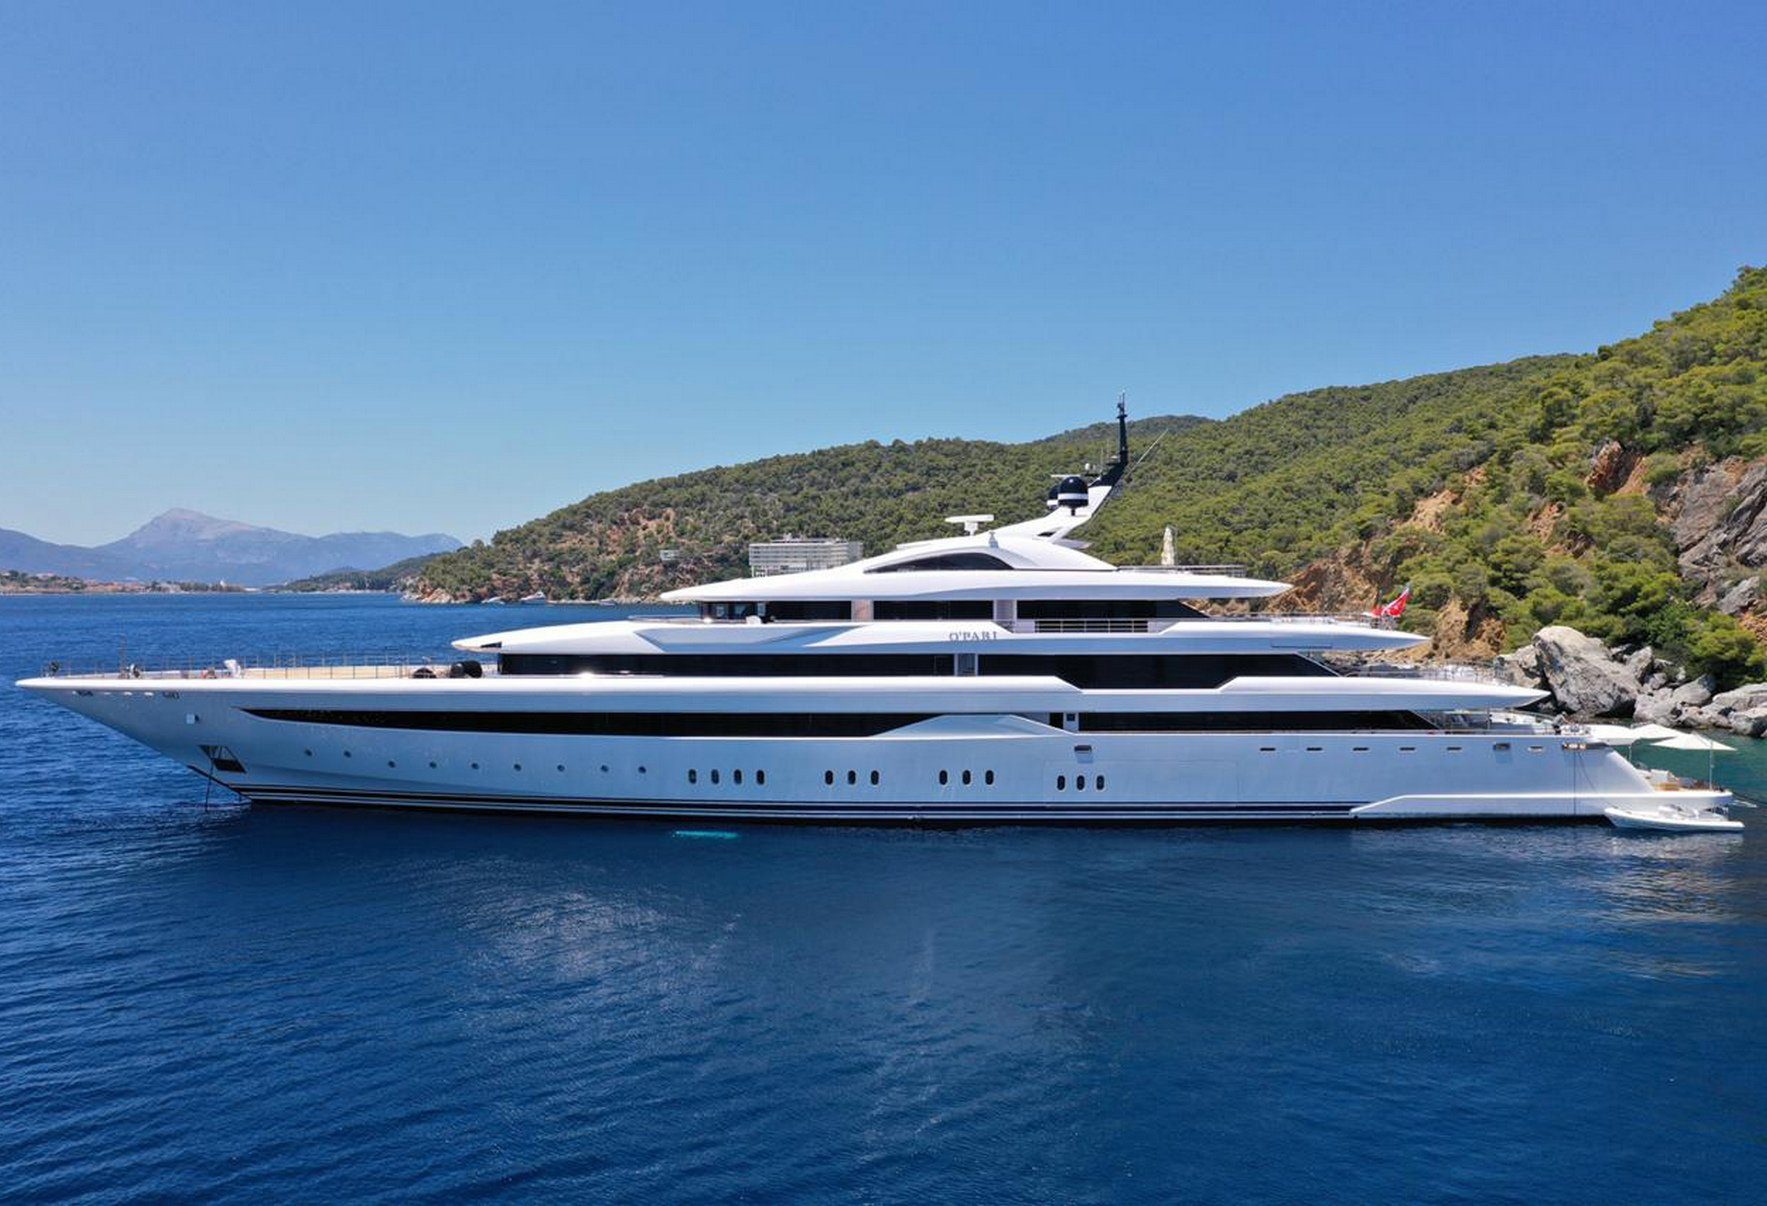 luxury-charter-yacht-opari-at-anchor4-4639562